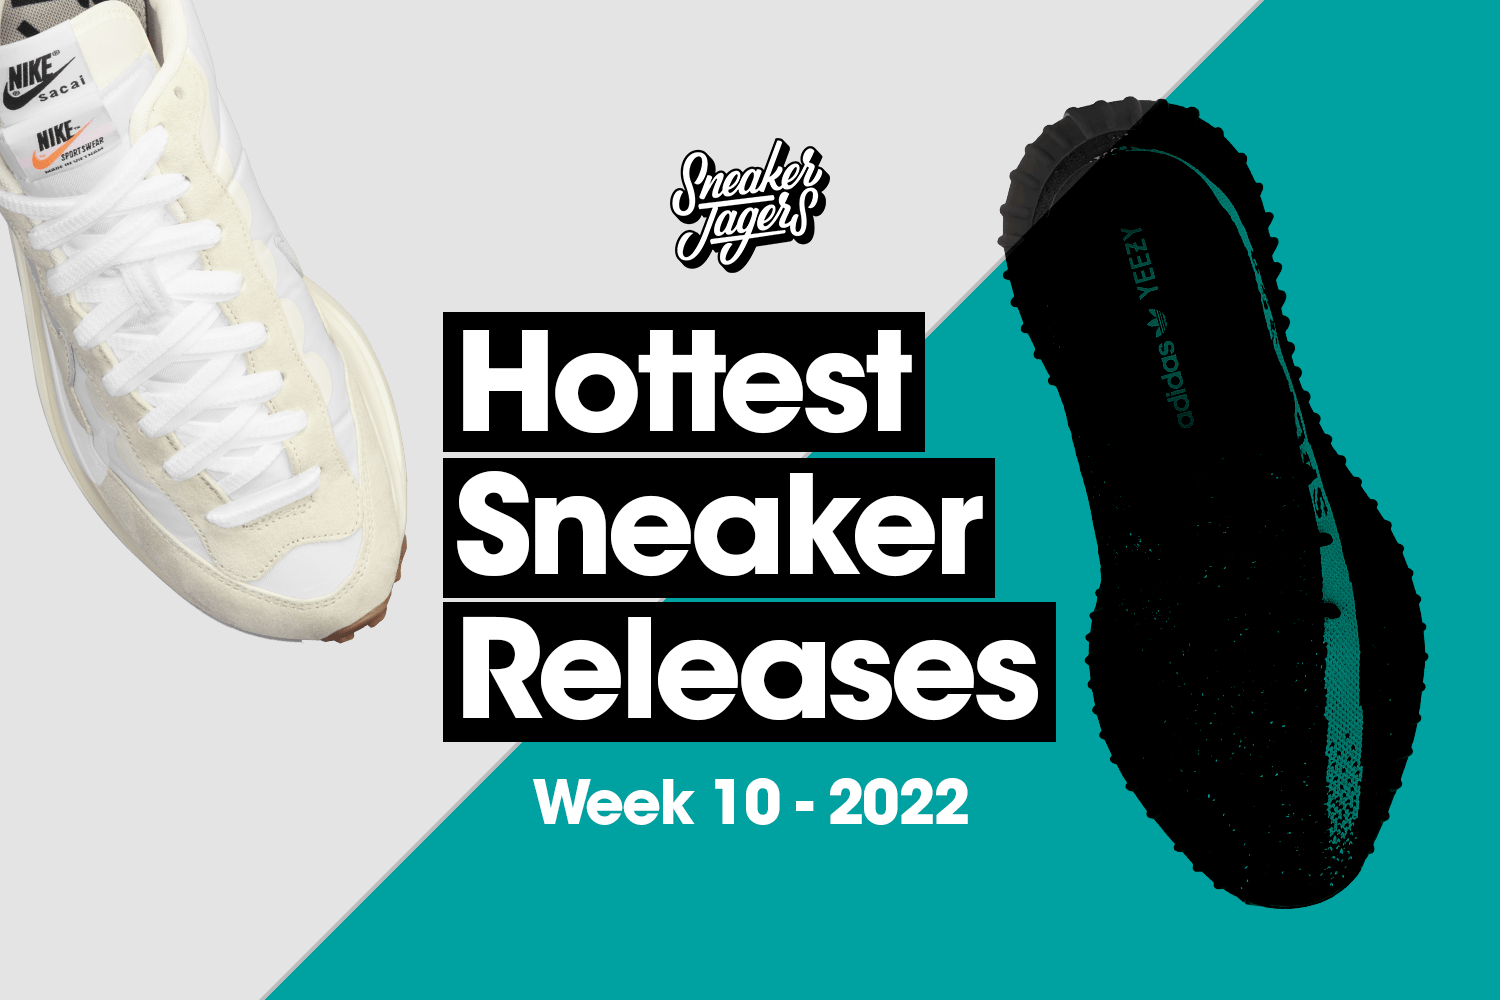 Hottest Sneaker Releases - Week 10